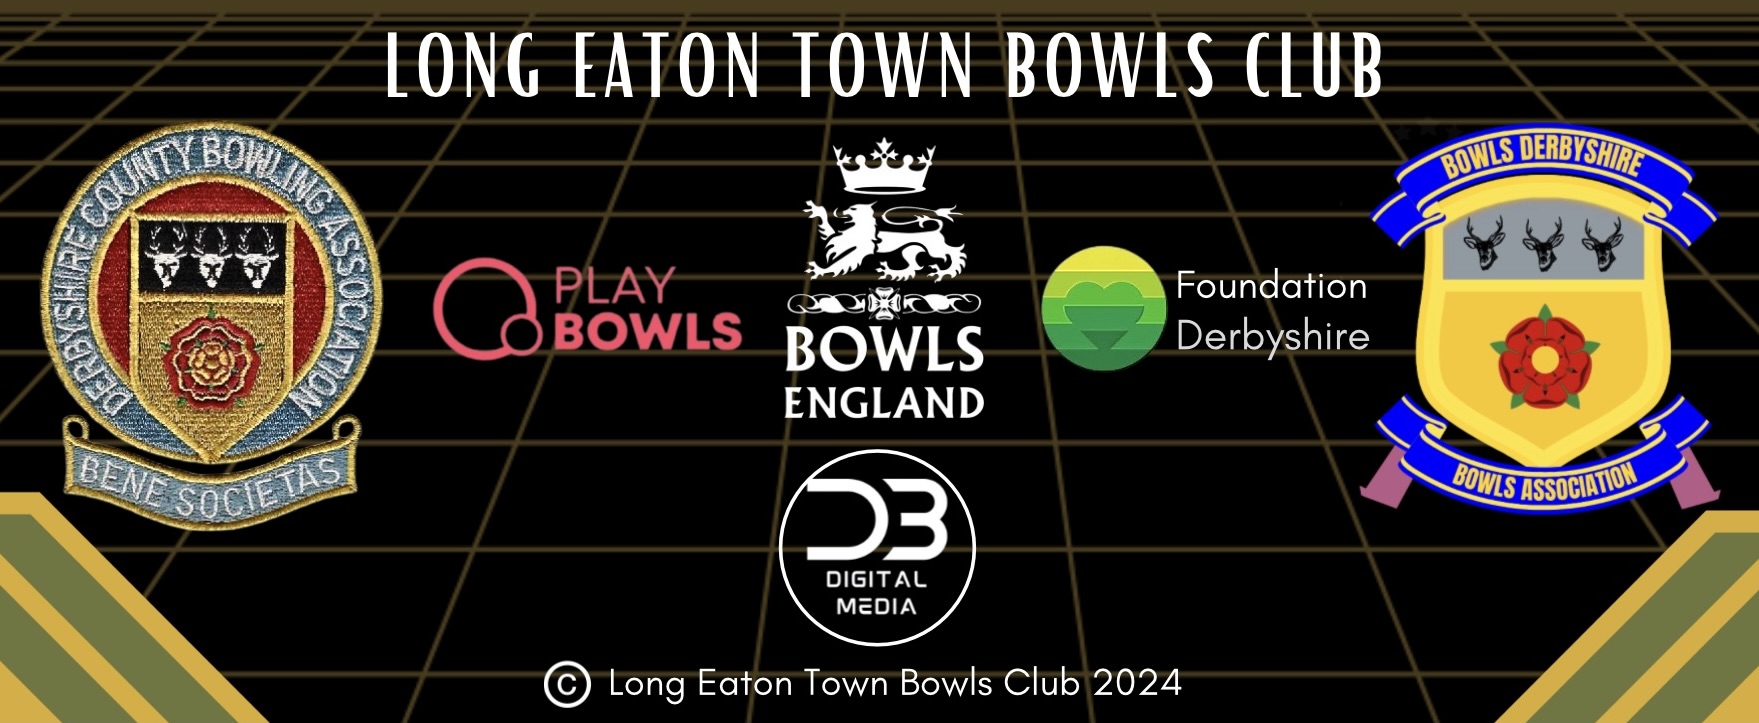 Long Eaton Town Bowls Club Club Officers